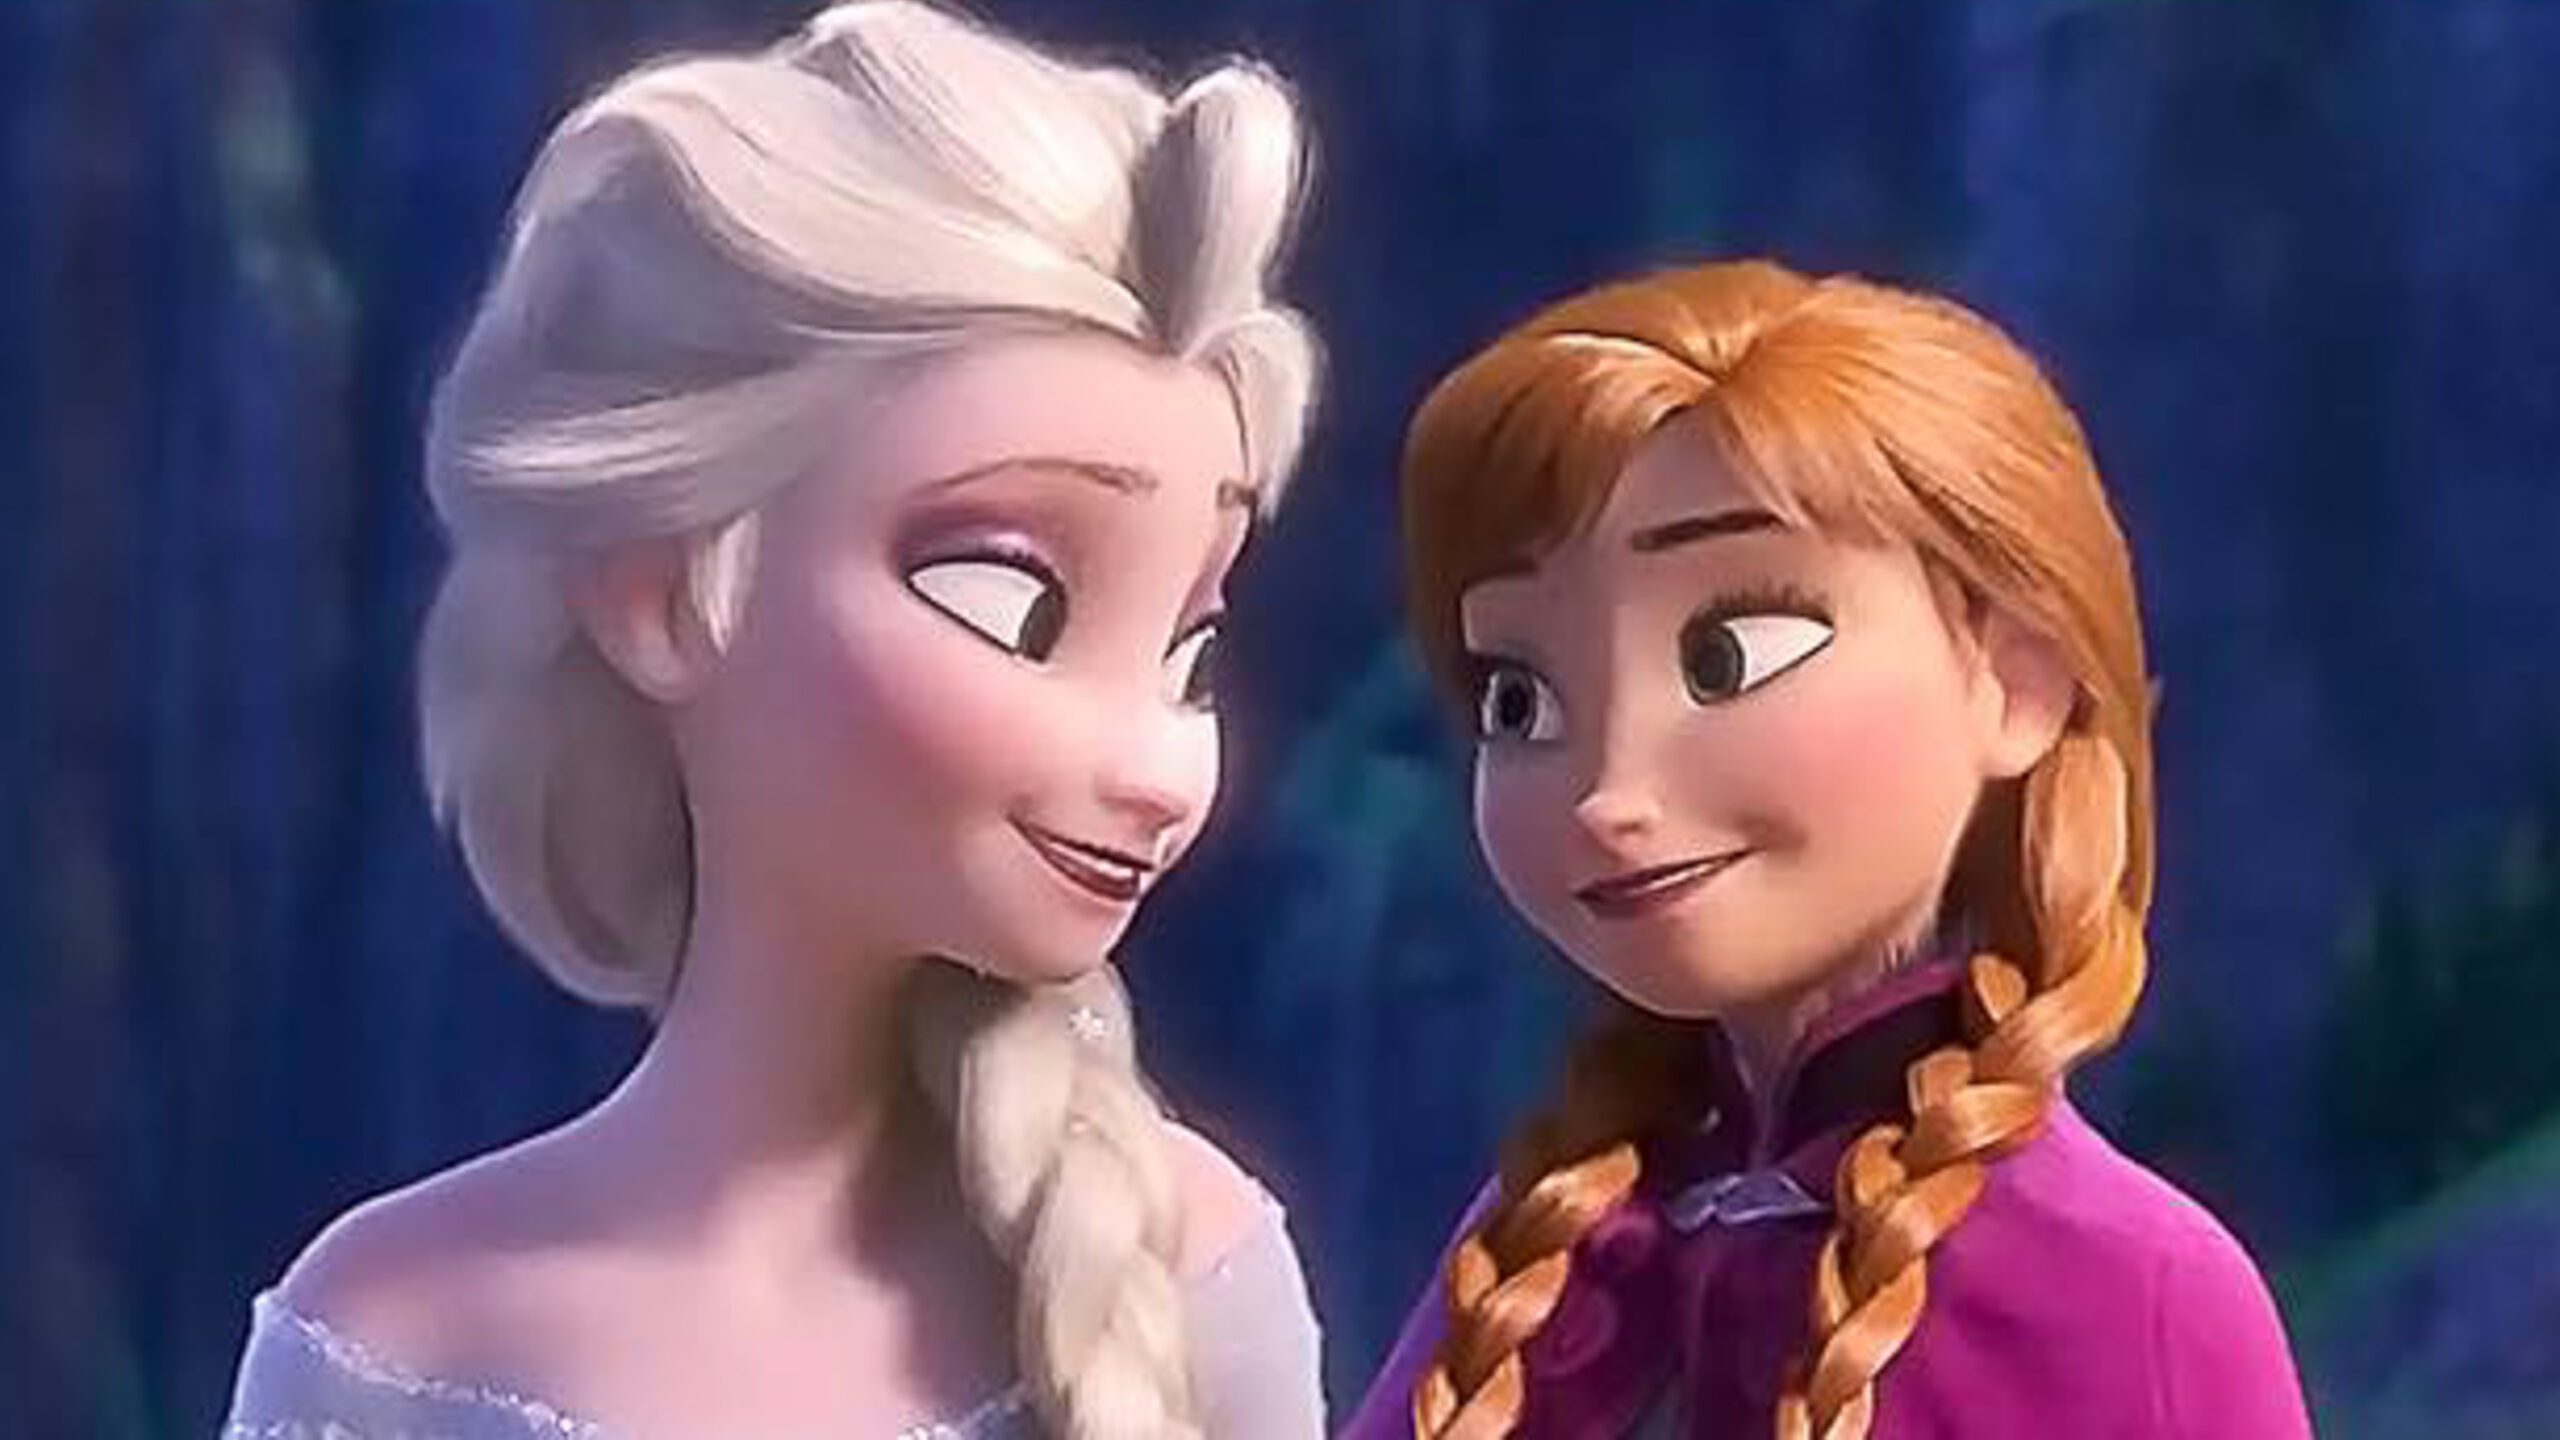 ‘Frozen’ producer reveals the movie’s original ending